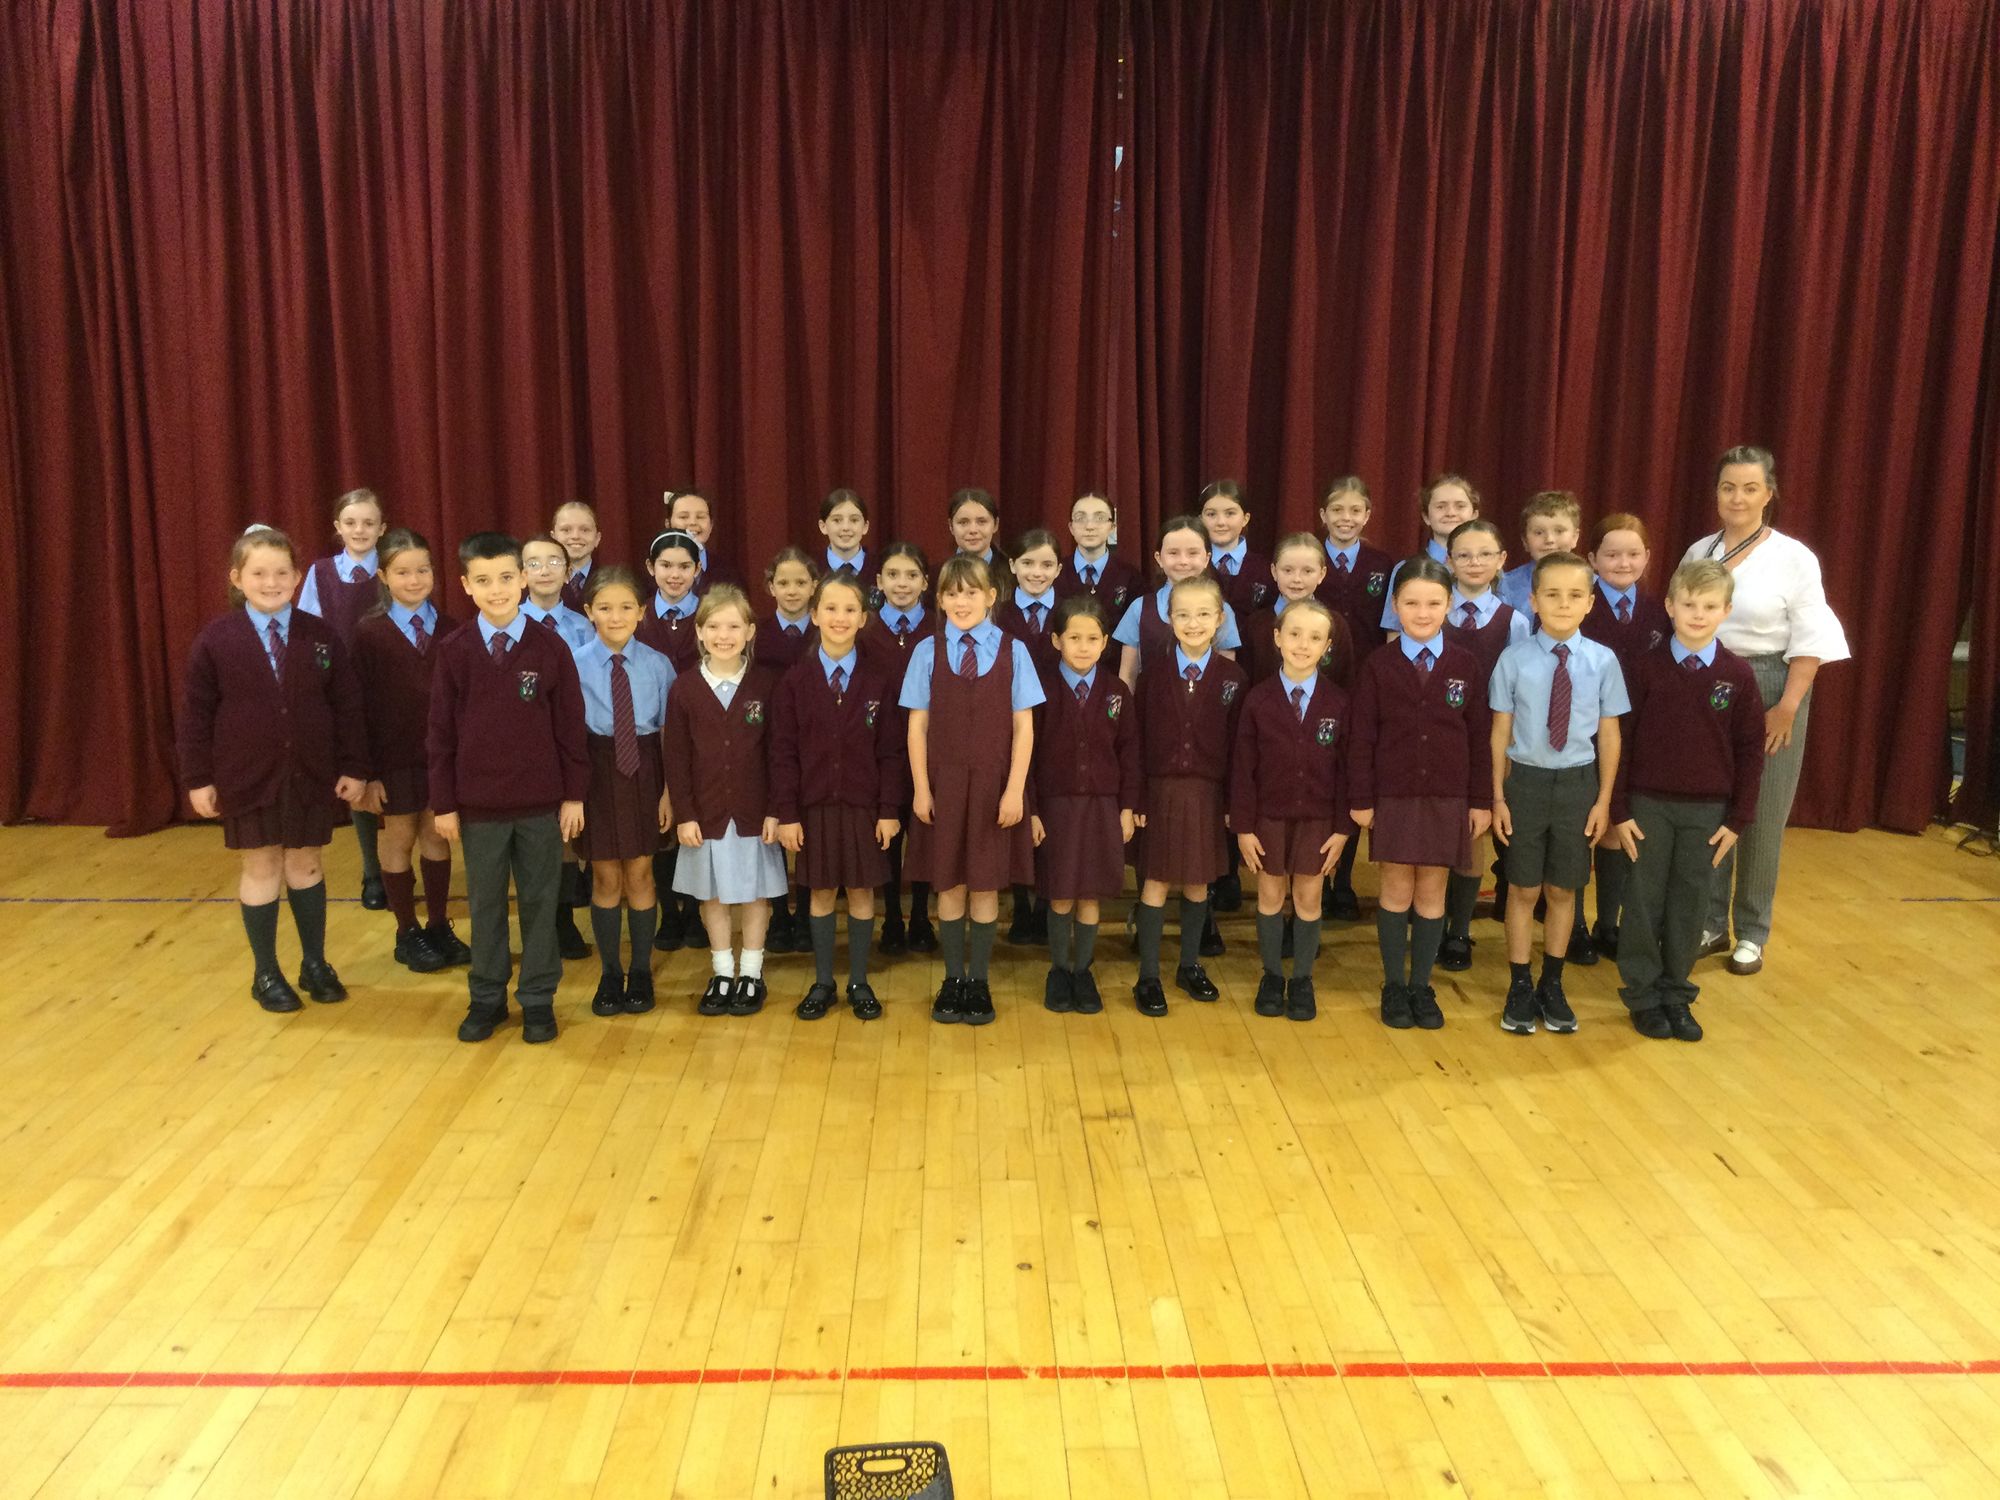 St John’s School choir